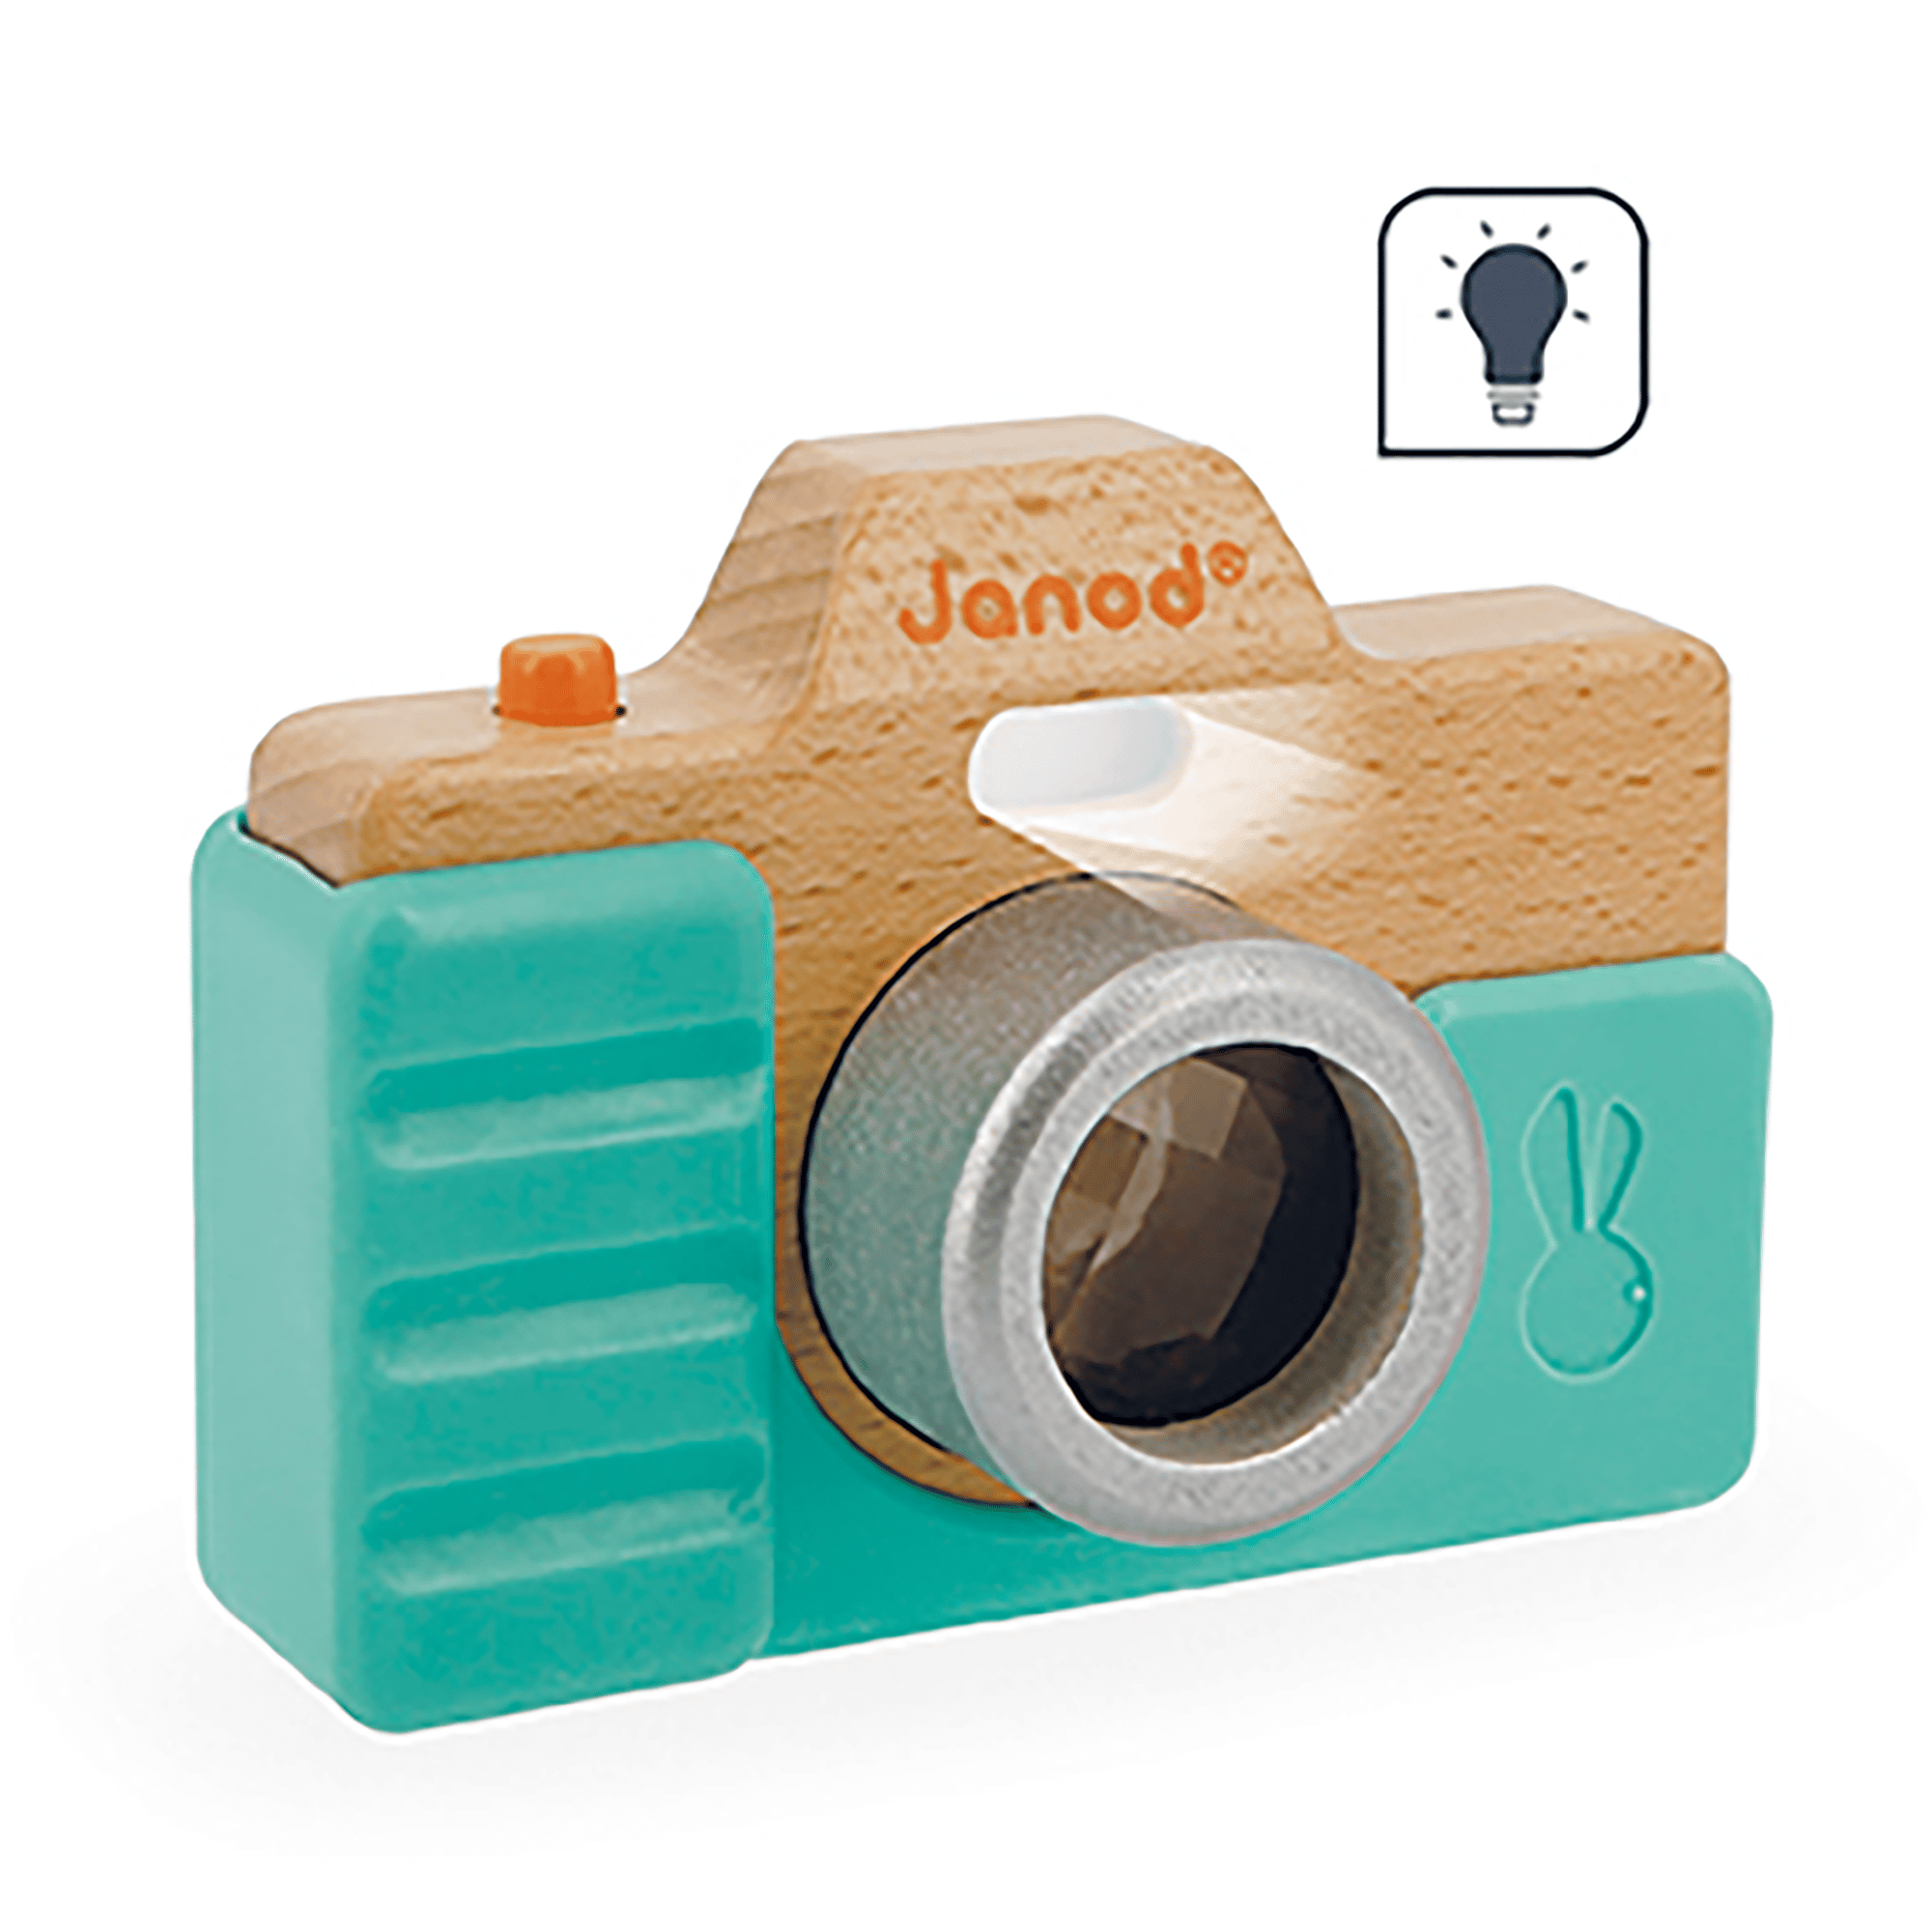 Kamera aus Holz Janod Türkis 2000584977208 2